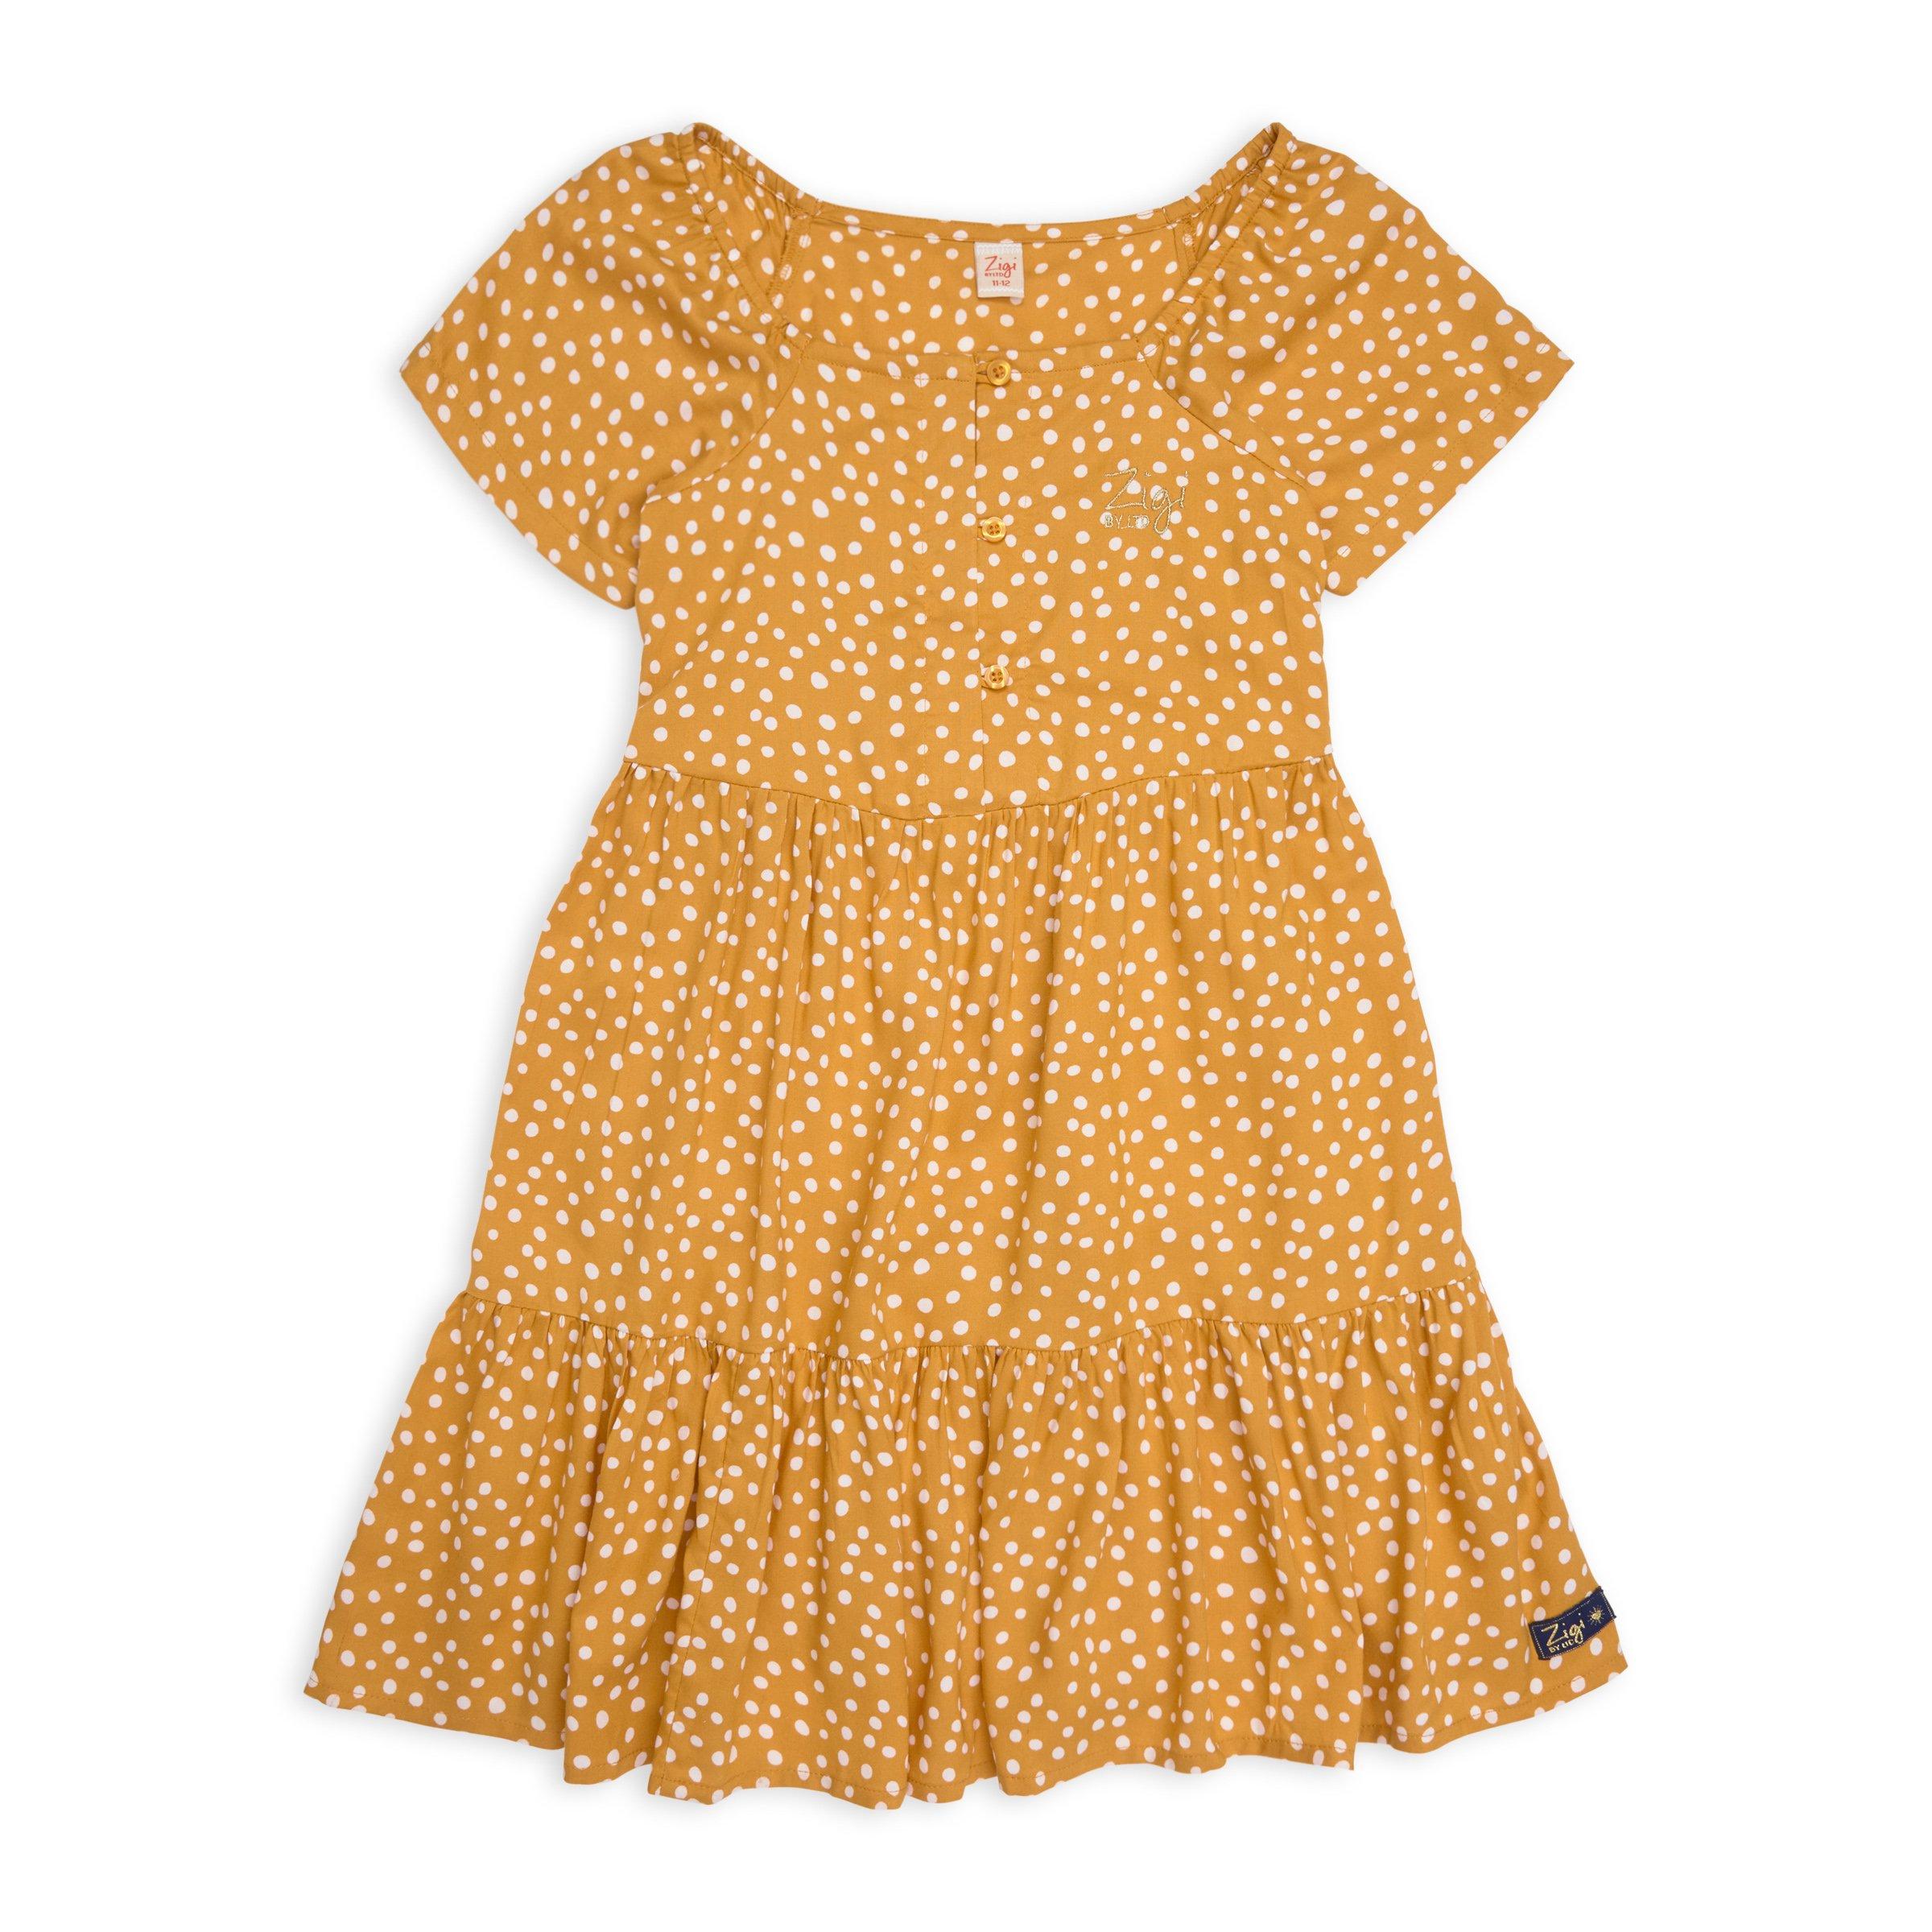 Buy LTD Kids Girls Spot Dress Online | Truworths